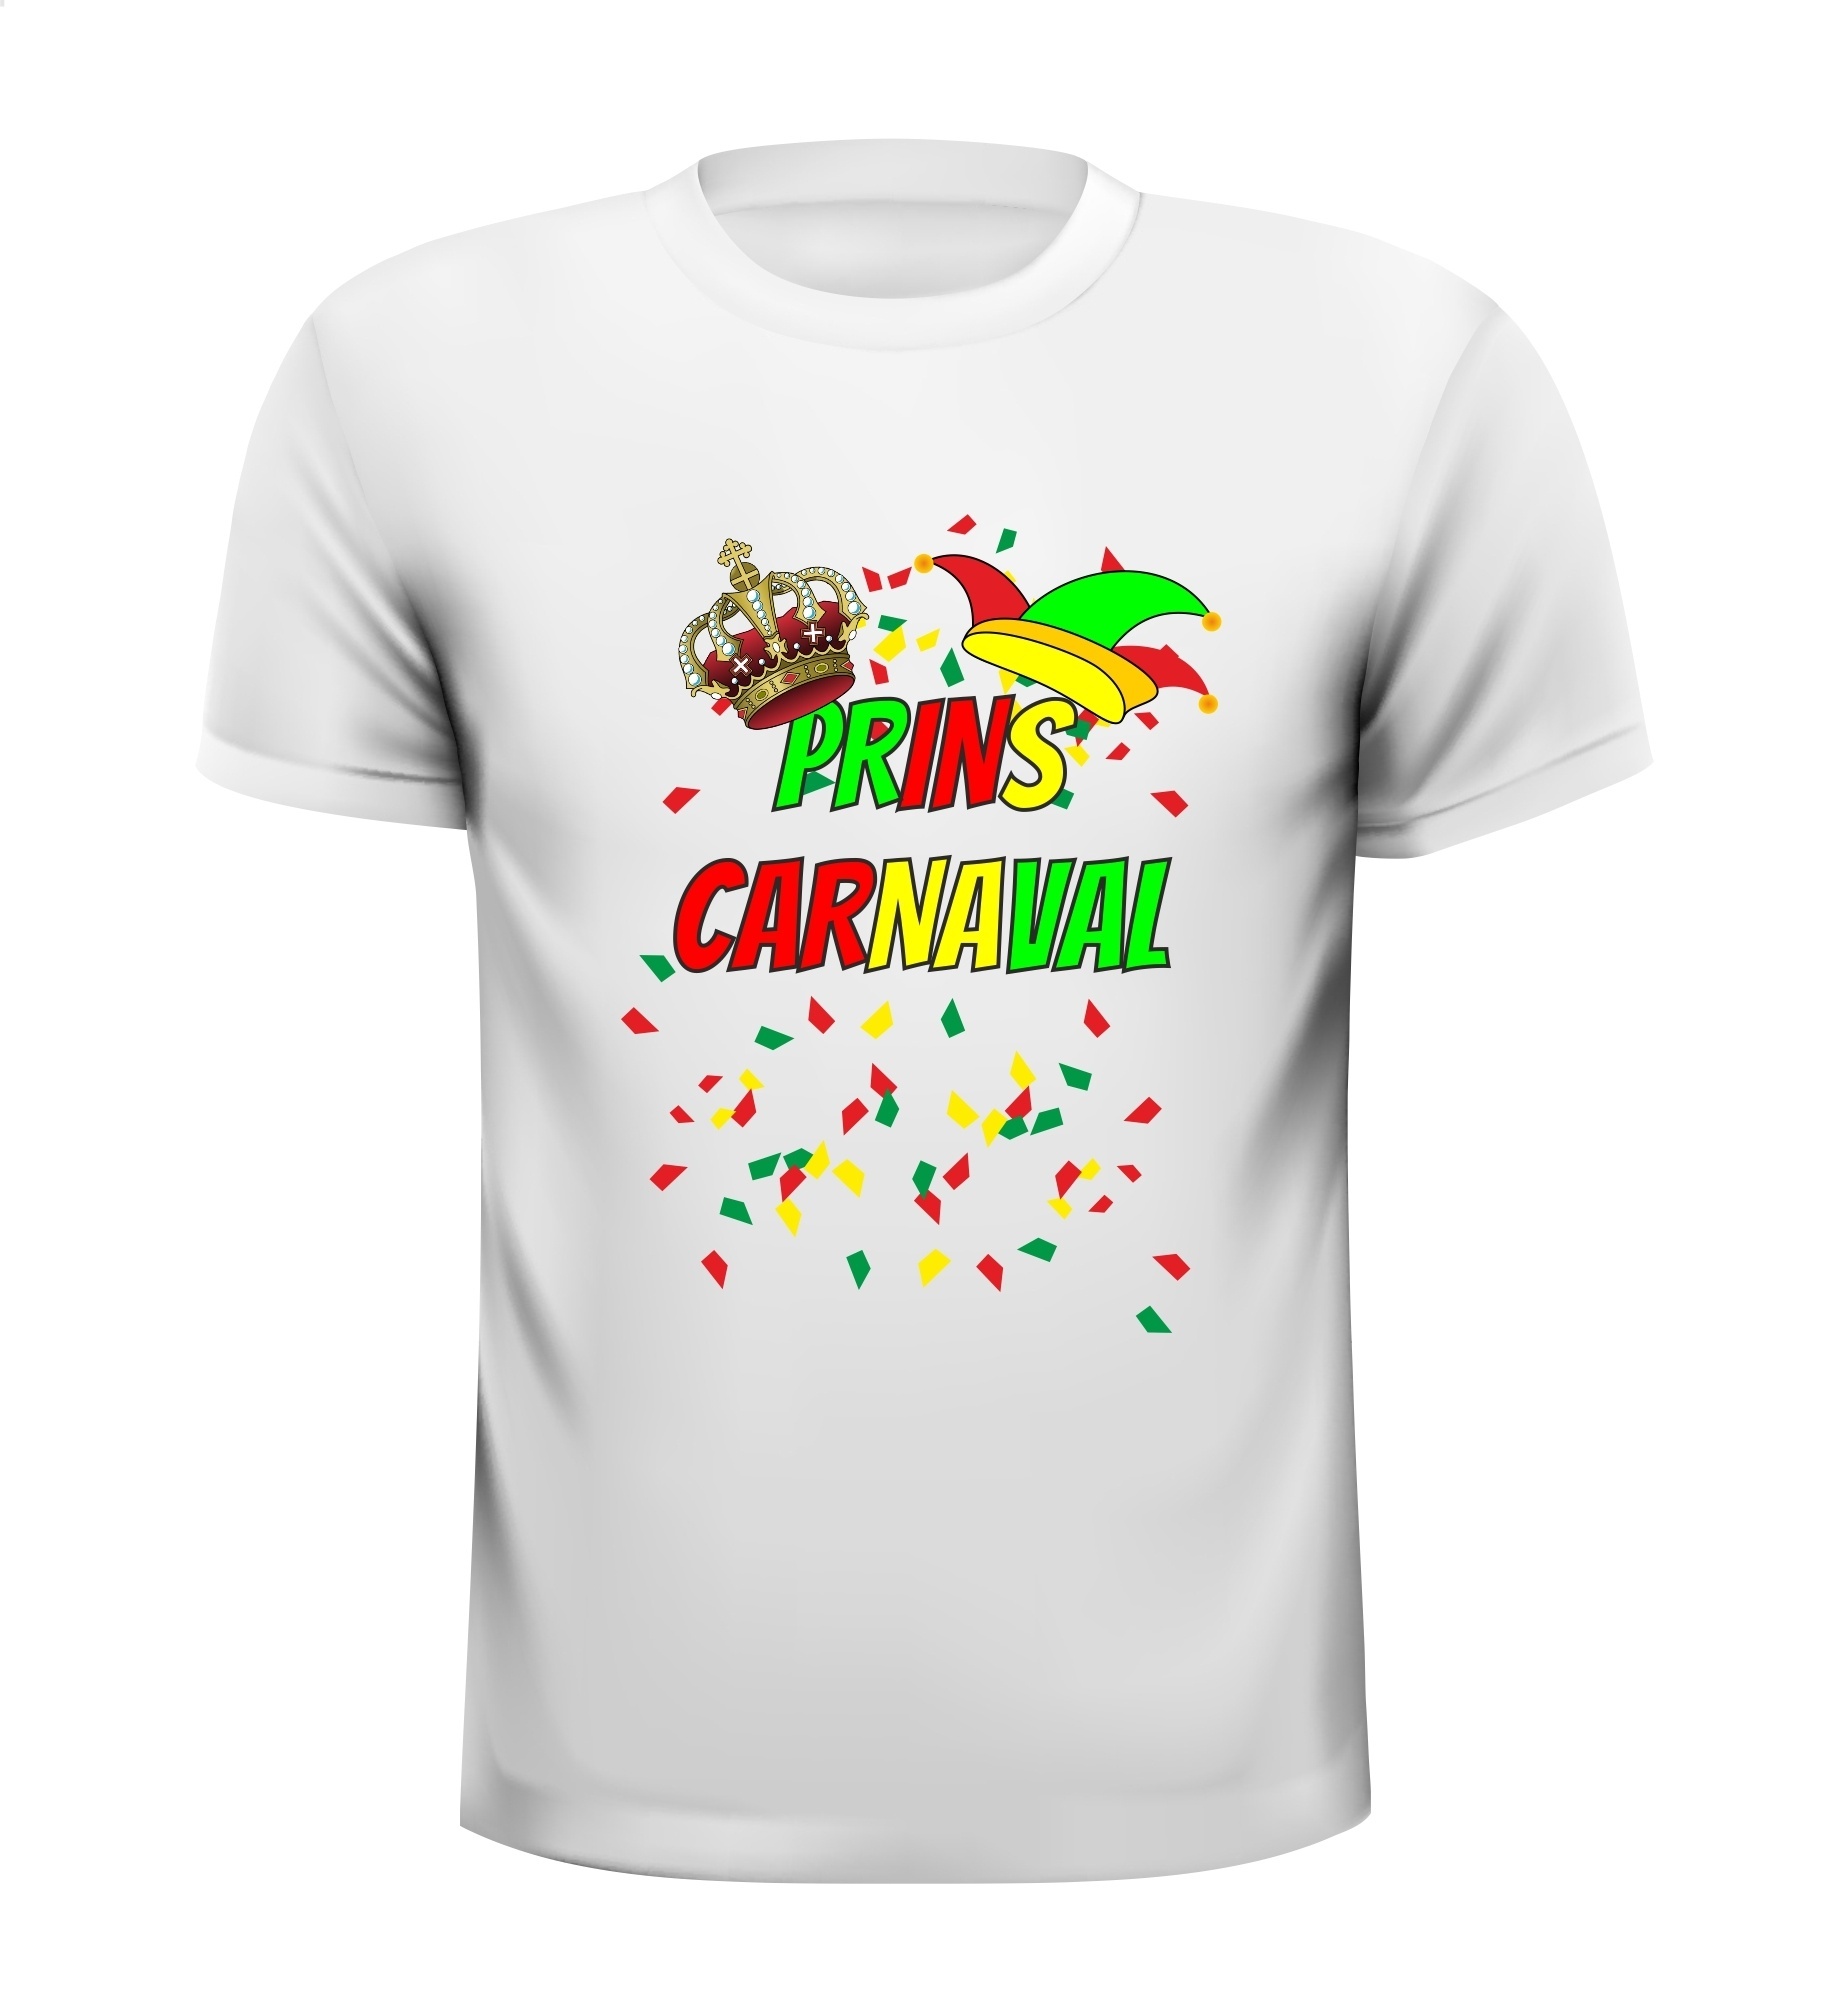 Prins carnaval T-shirt